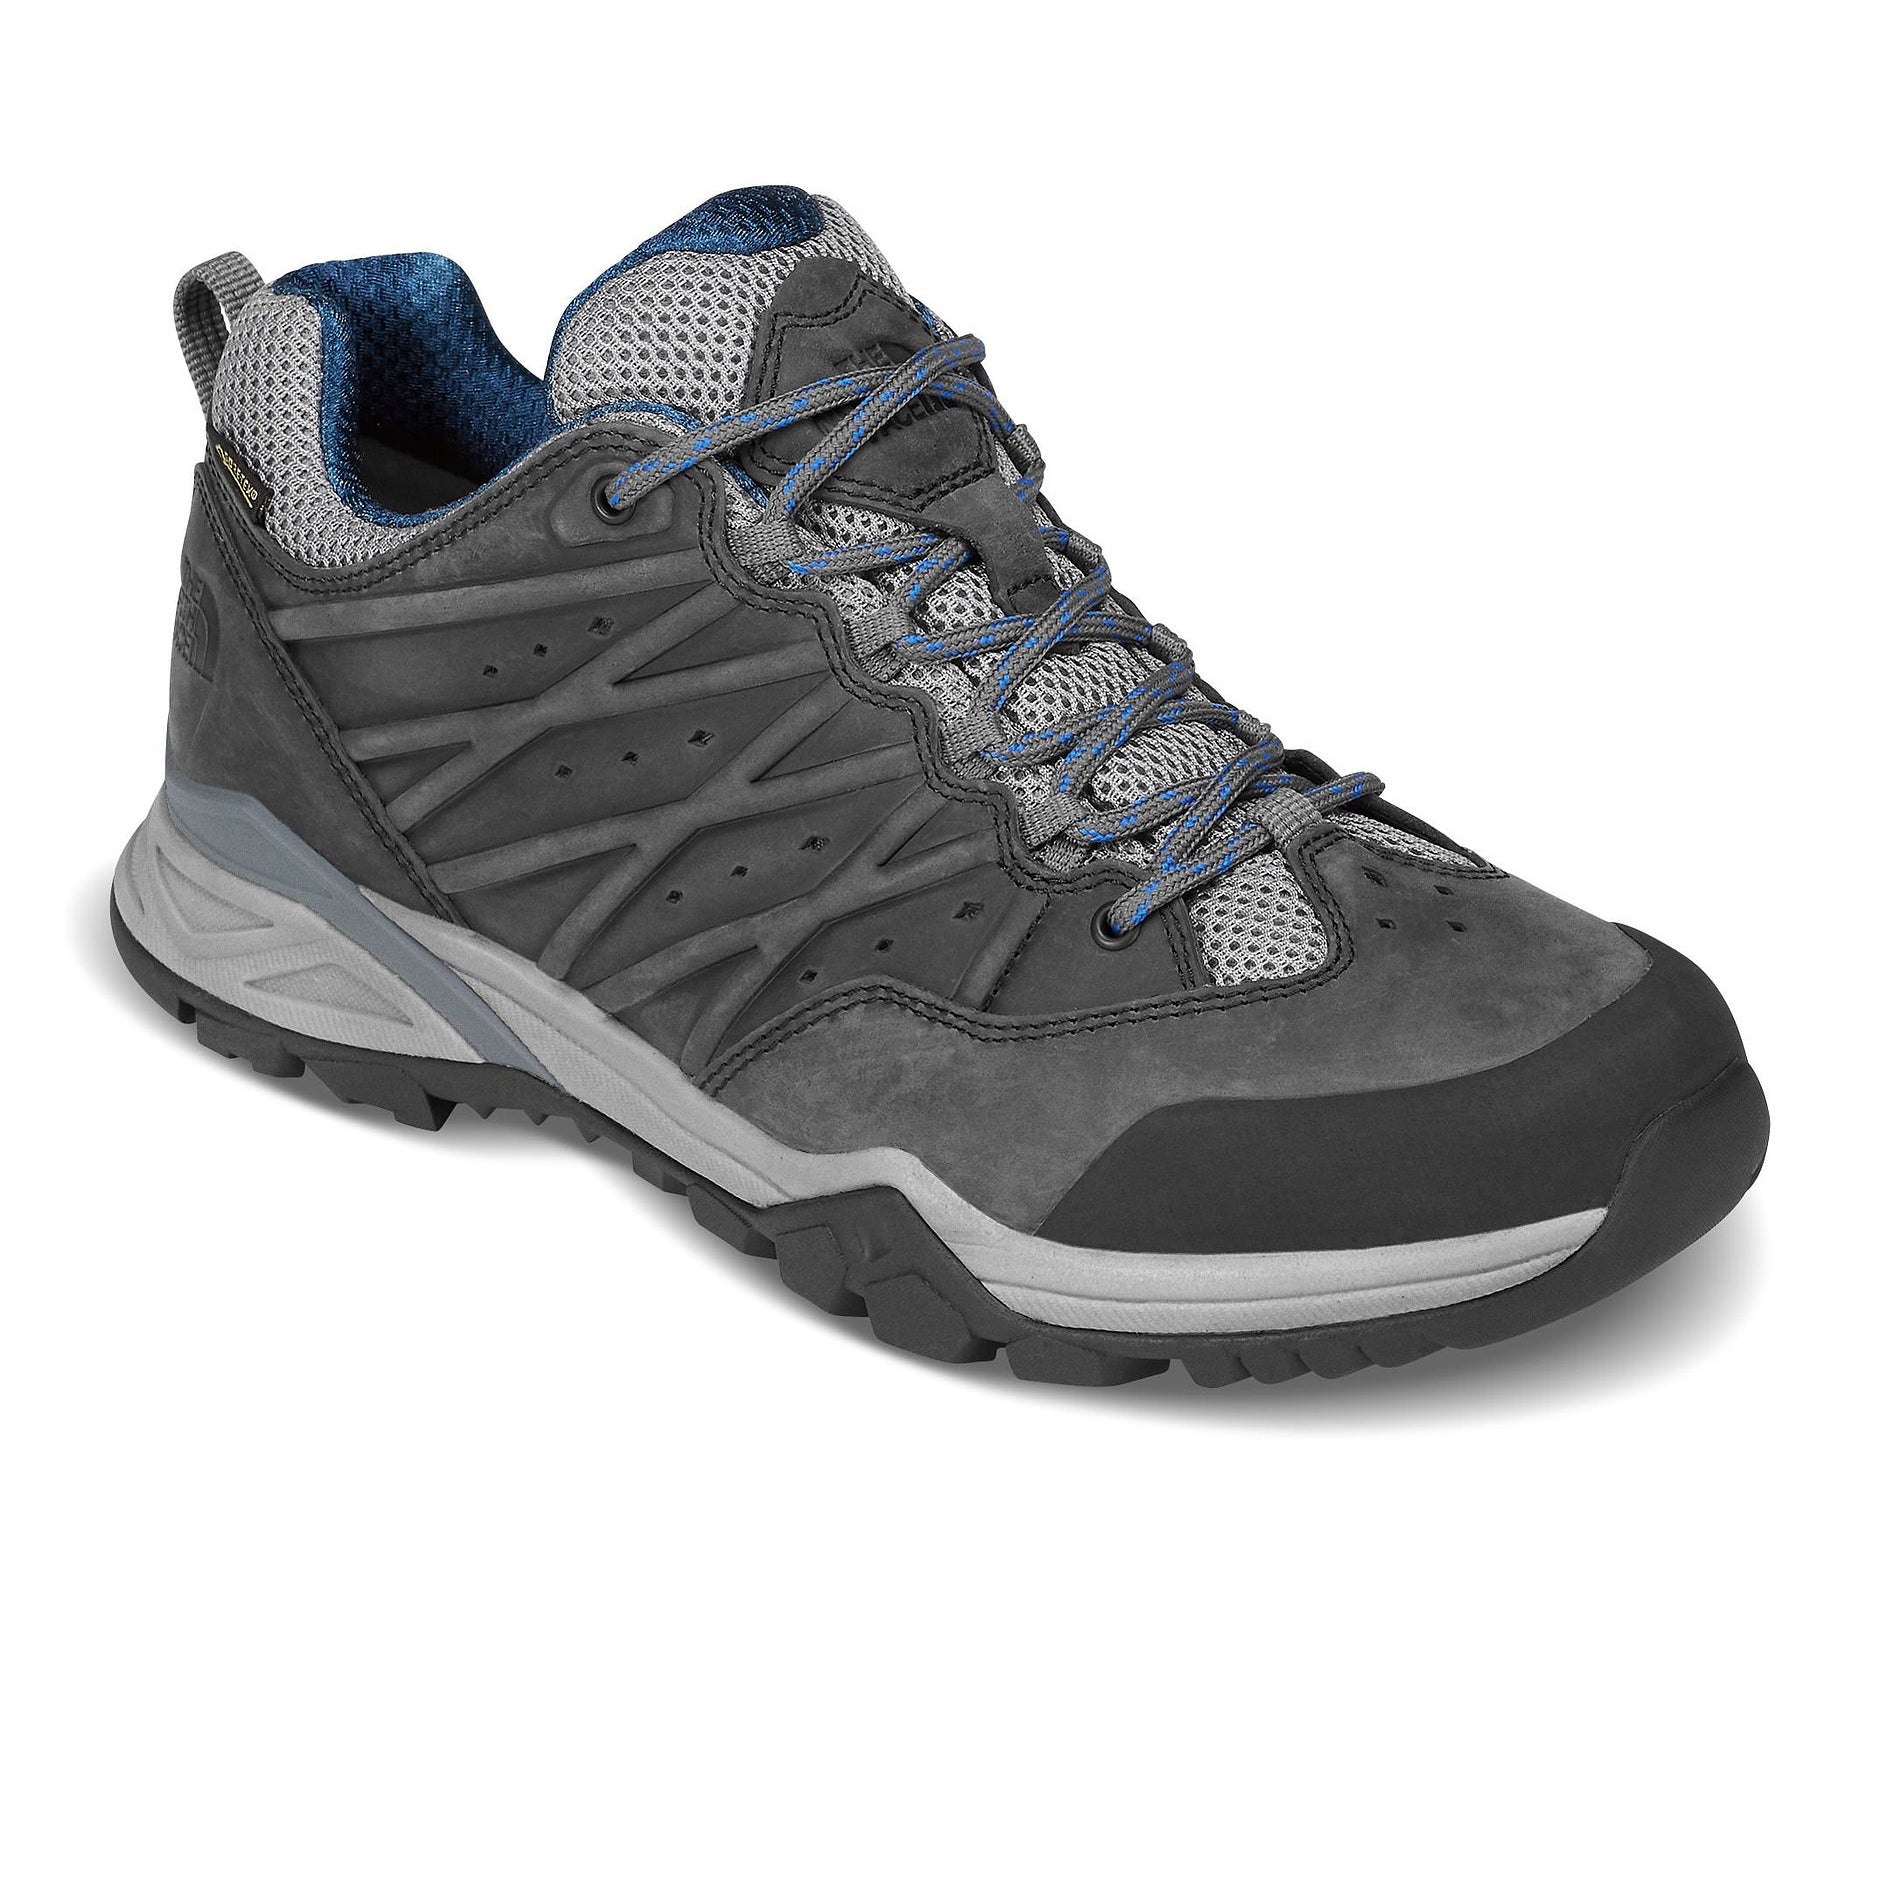 Men’s Hedgehog Hike II GORE-TEX® Shoes